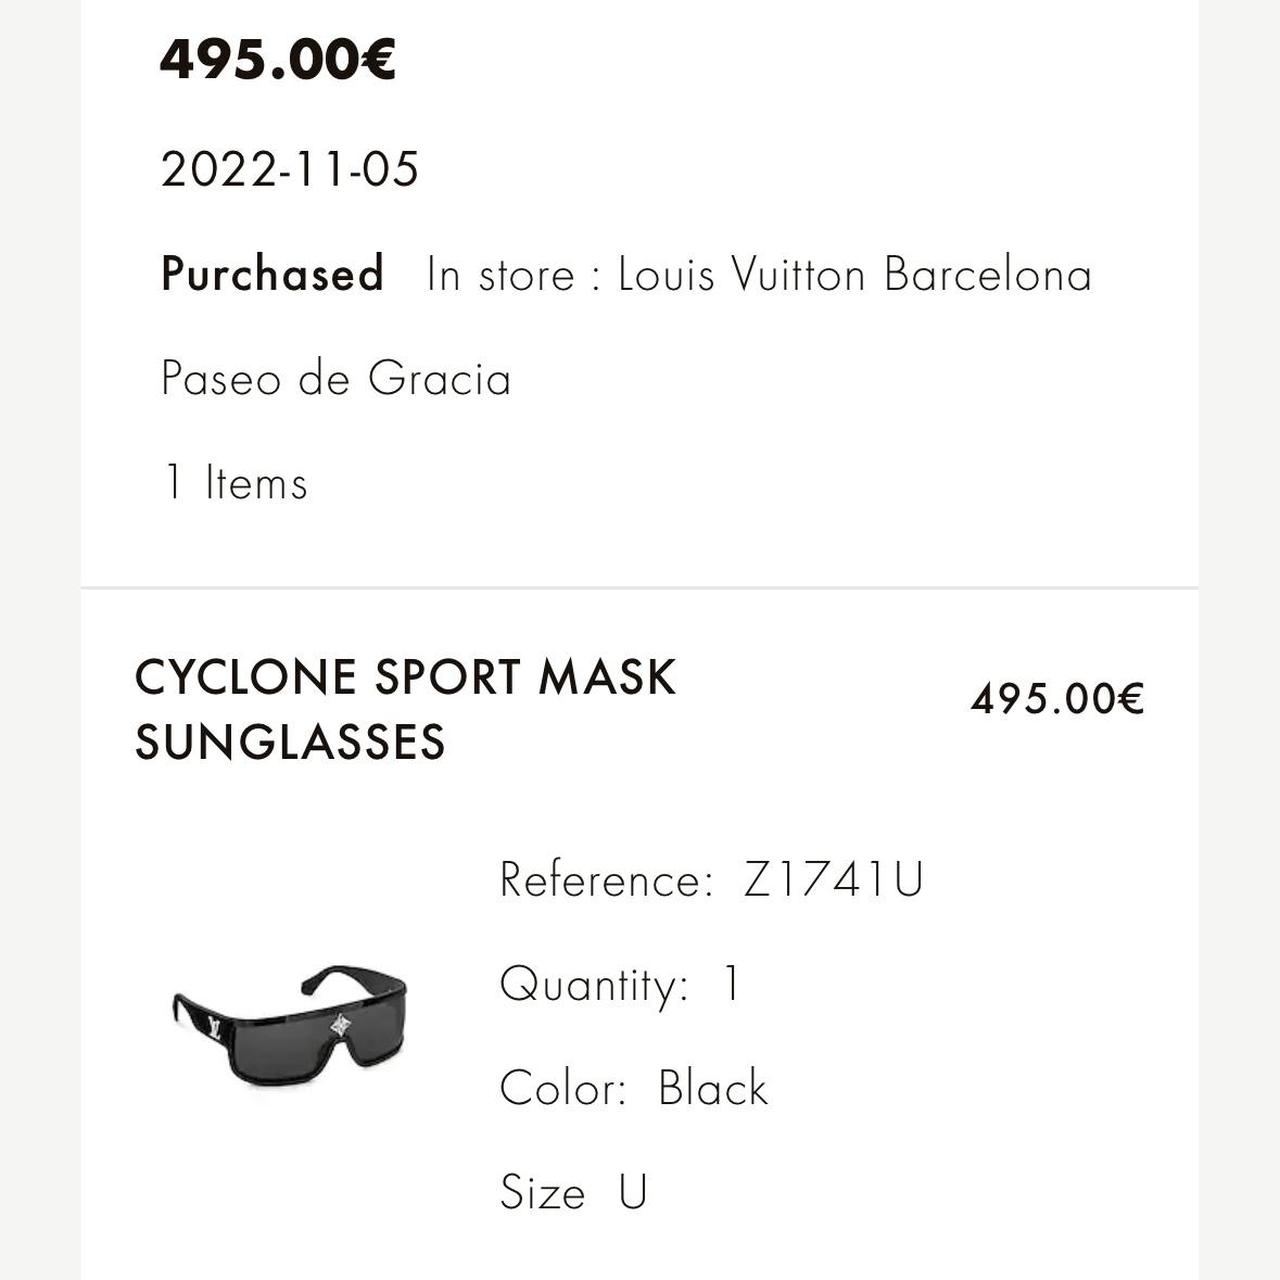 cyclone mask sunglasses